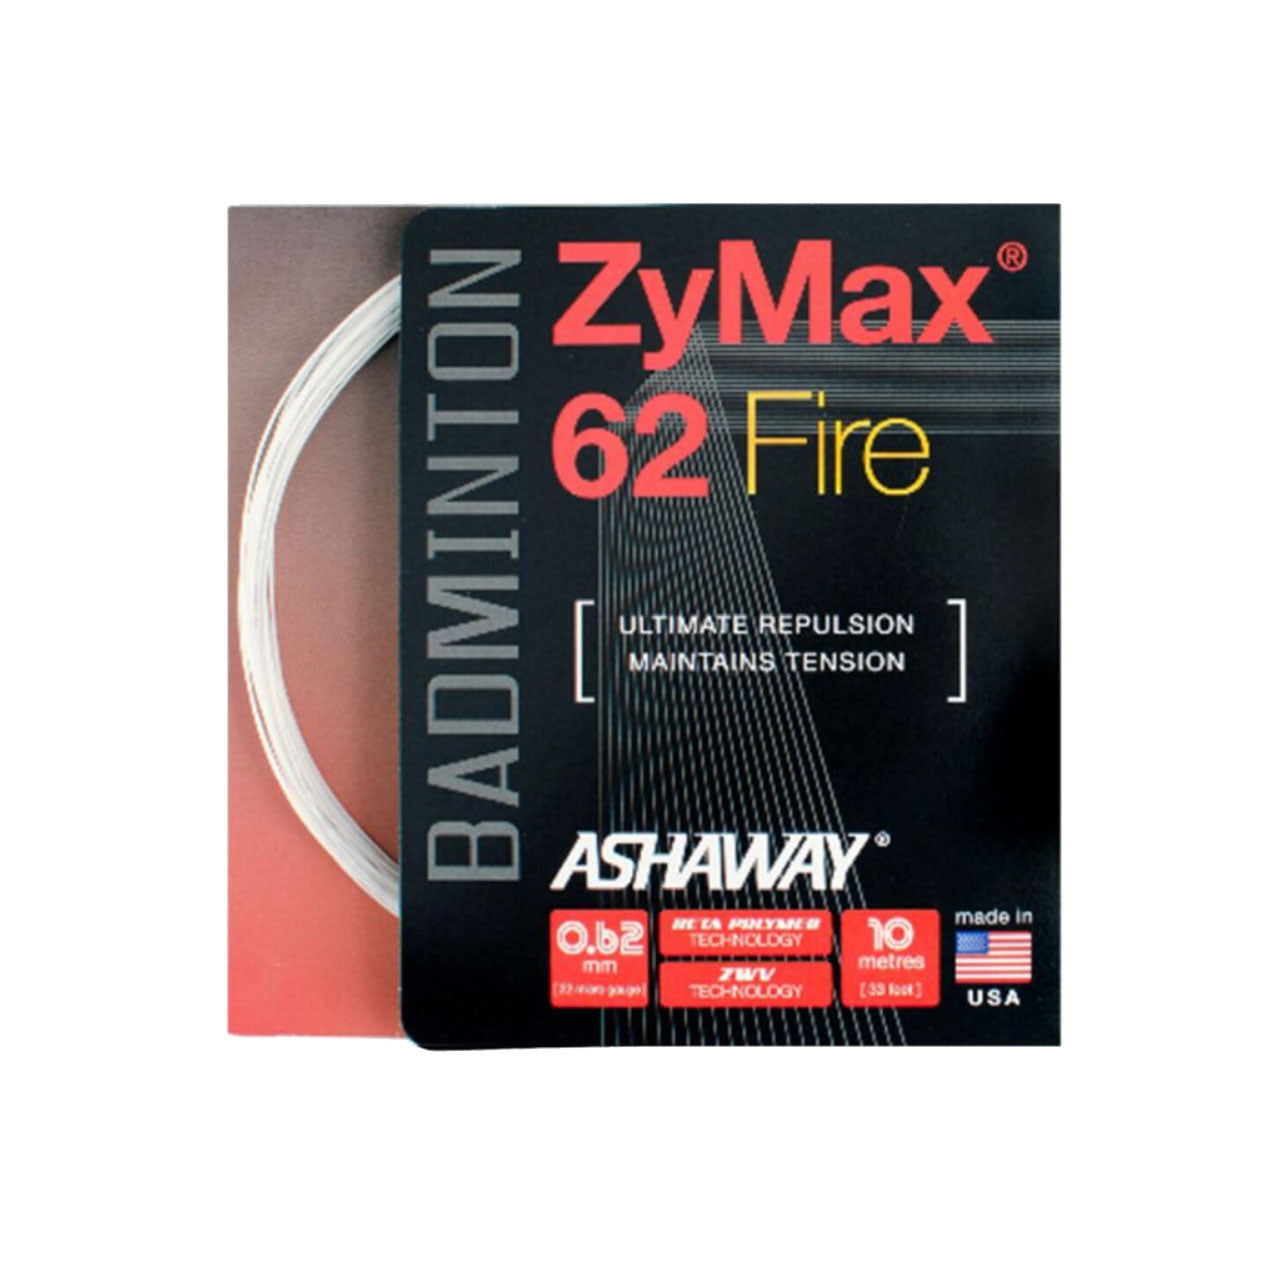 Ashaway ZyMax 62 Fire String (10m) White